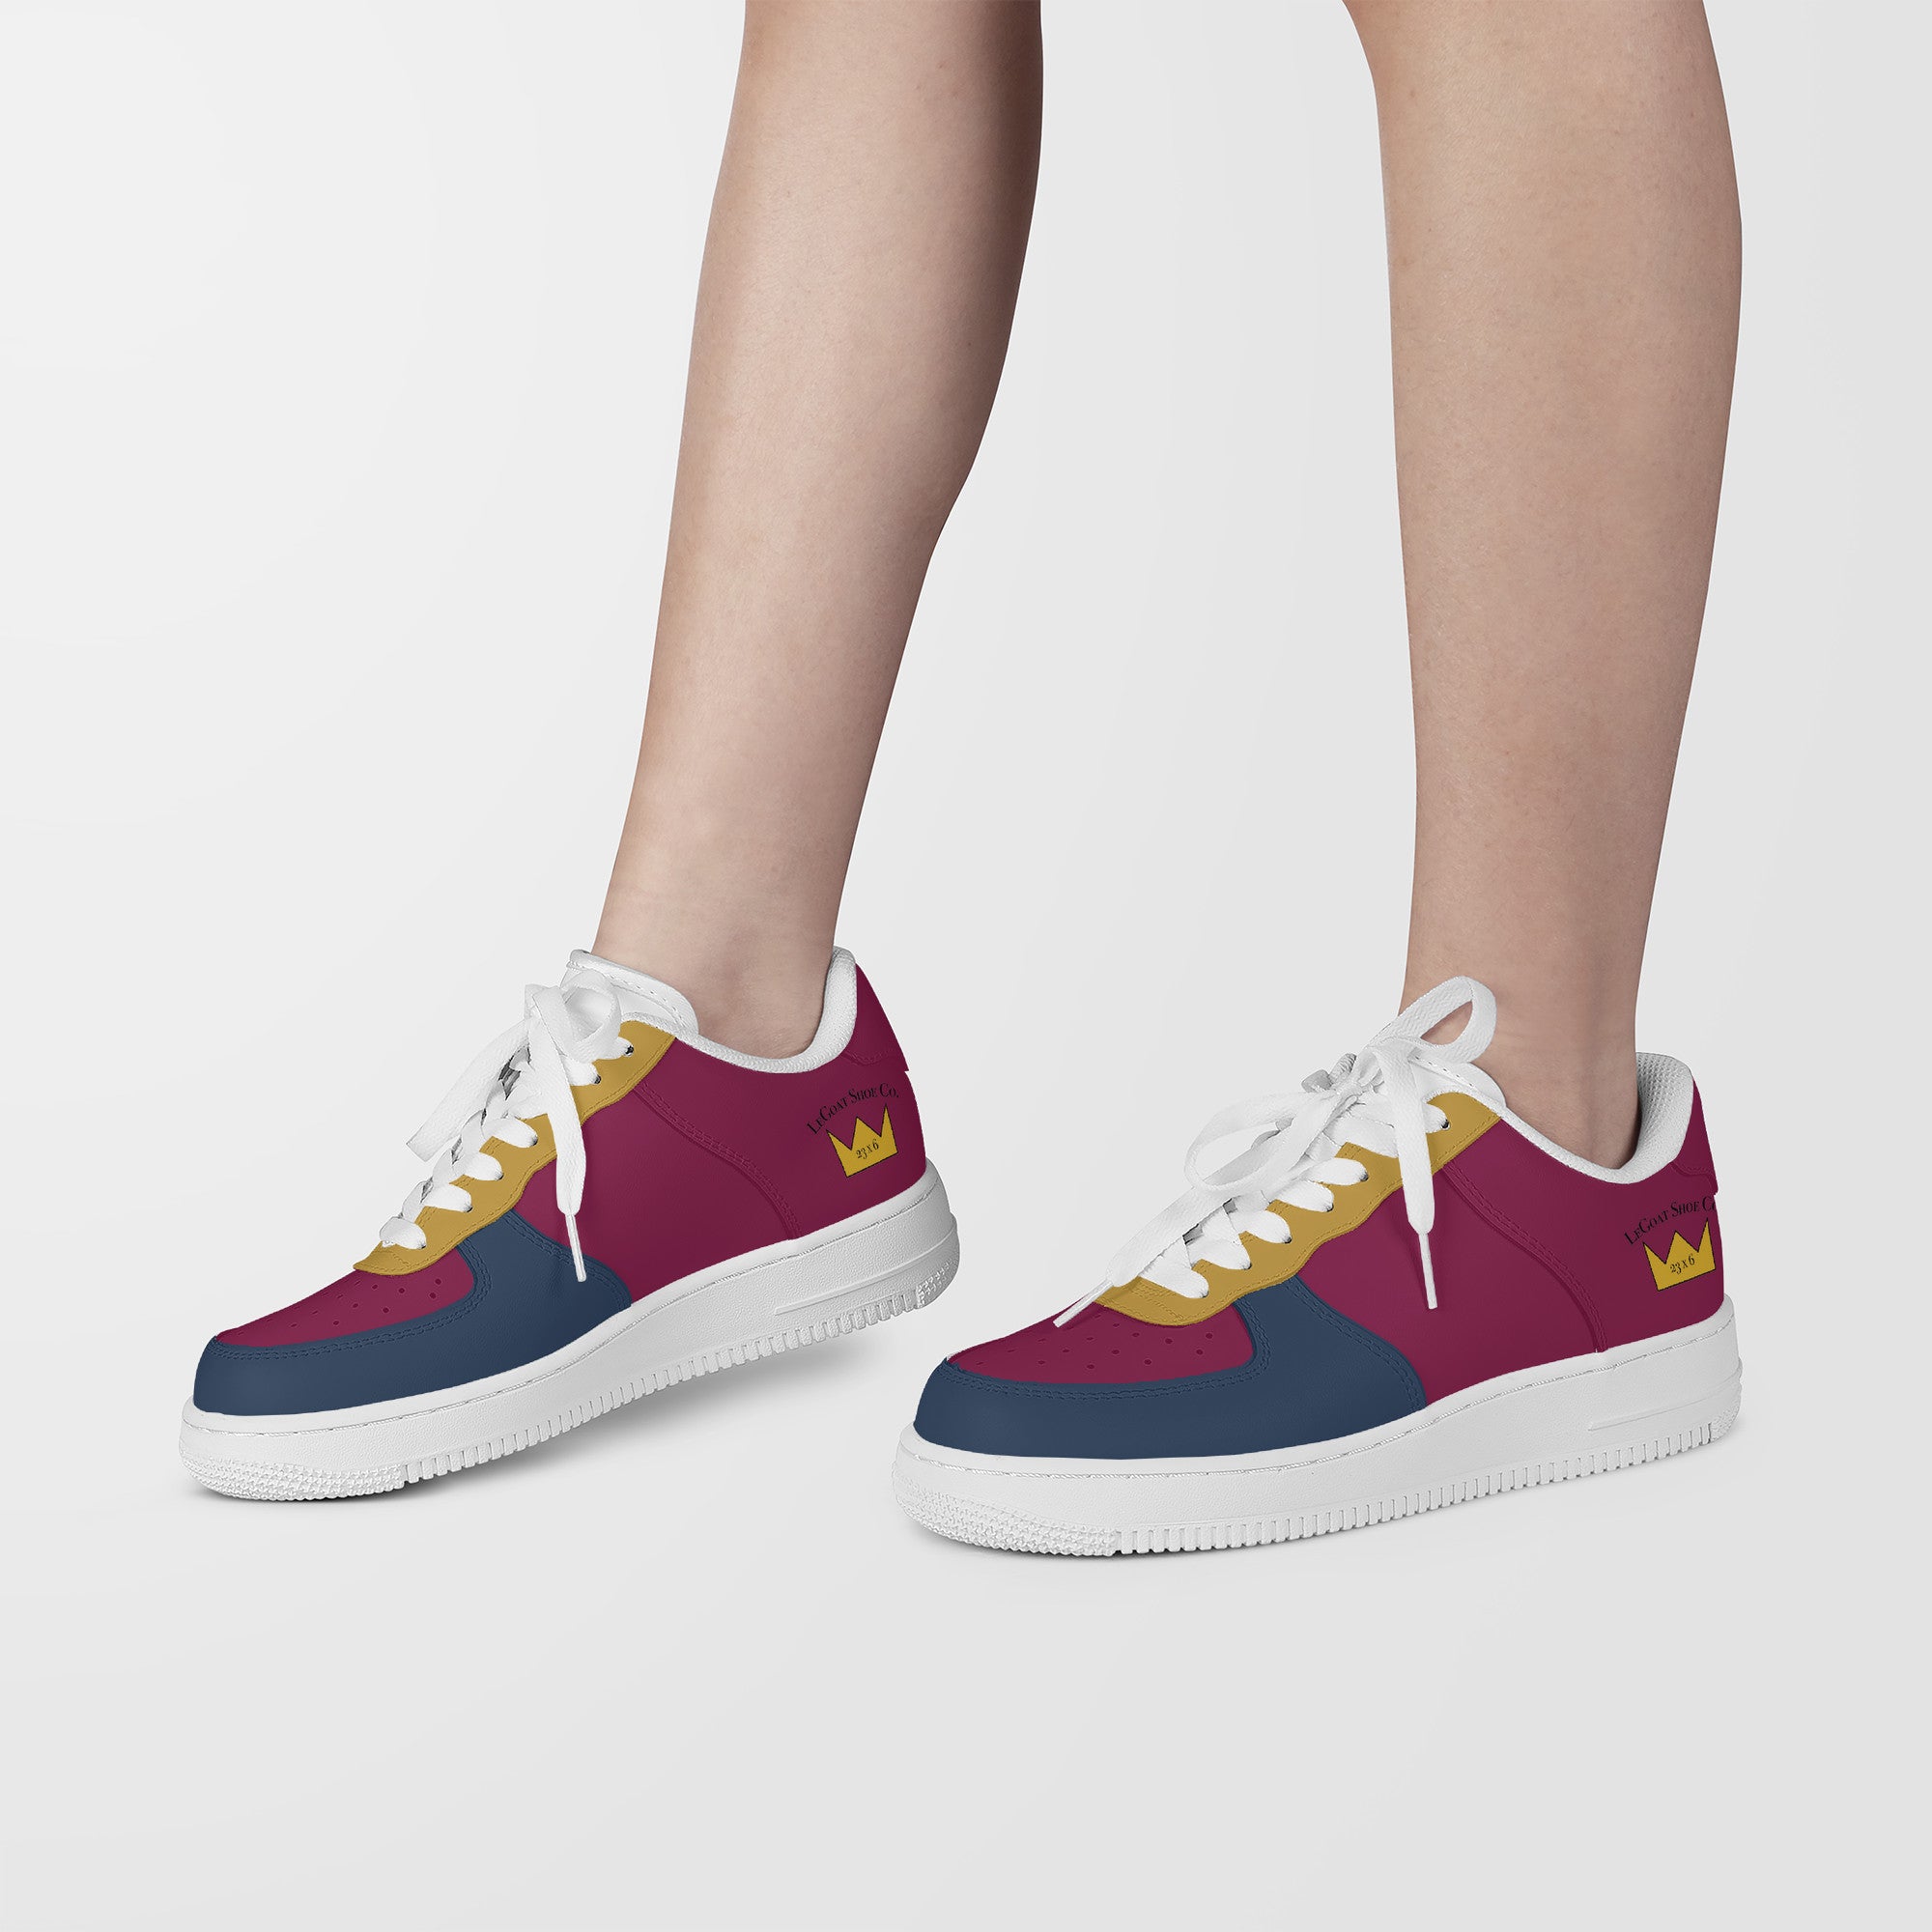 LeGoat shoes by Parker N | Low Top Customized | Shoe Zero